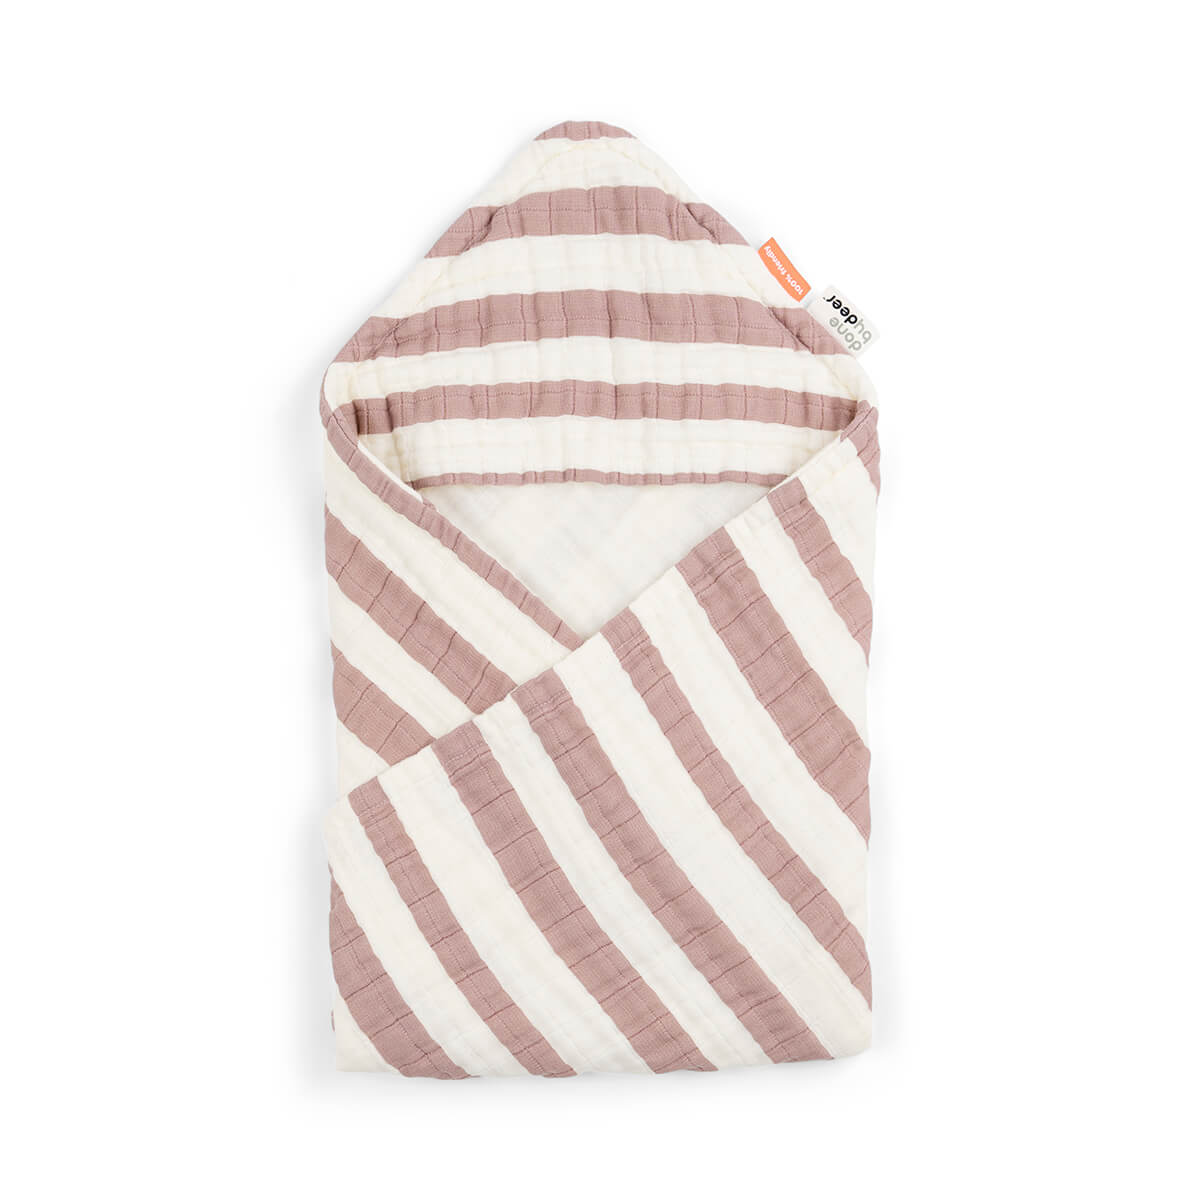 Hooded towel - Stripes - Powder